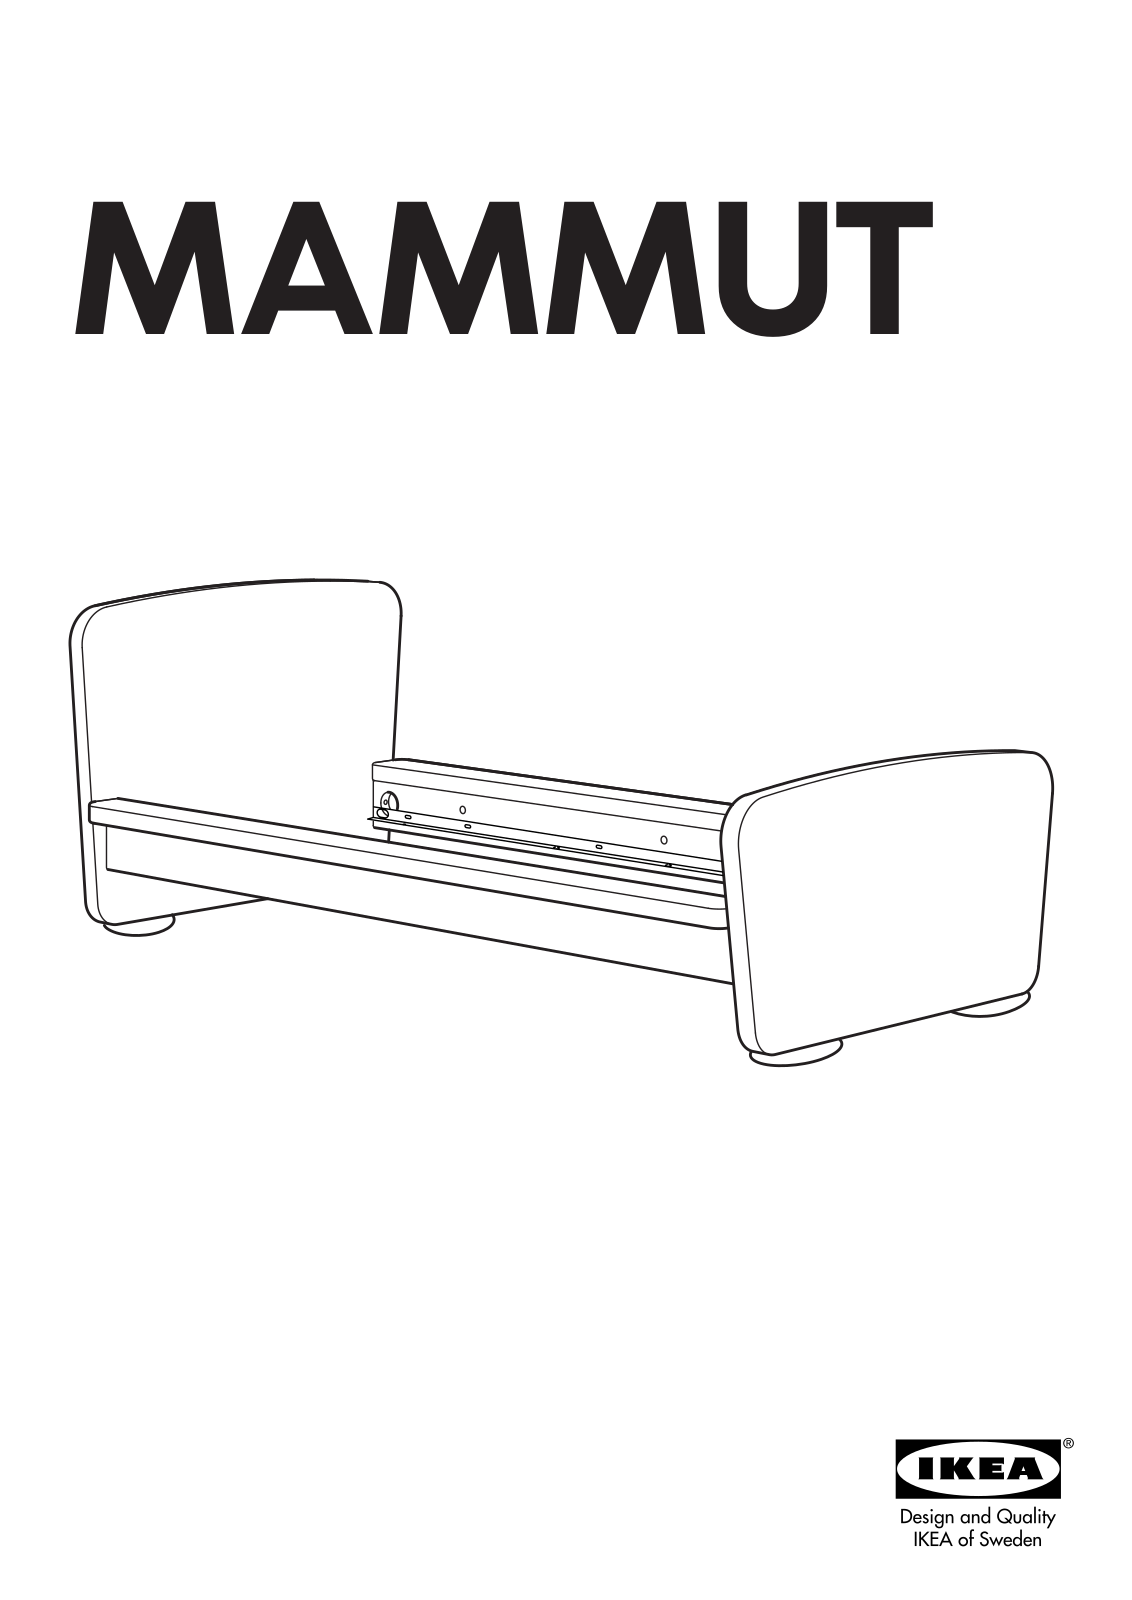 IKEA MAMMUT BED FRAME 27 1-2X63 Assembly Instruction